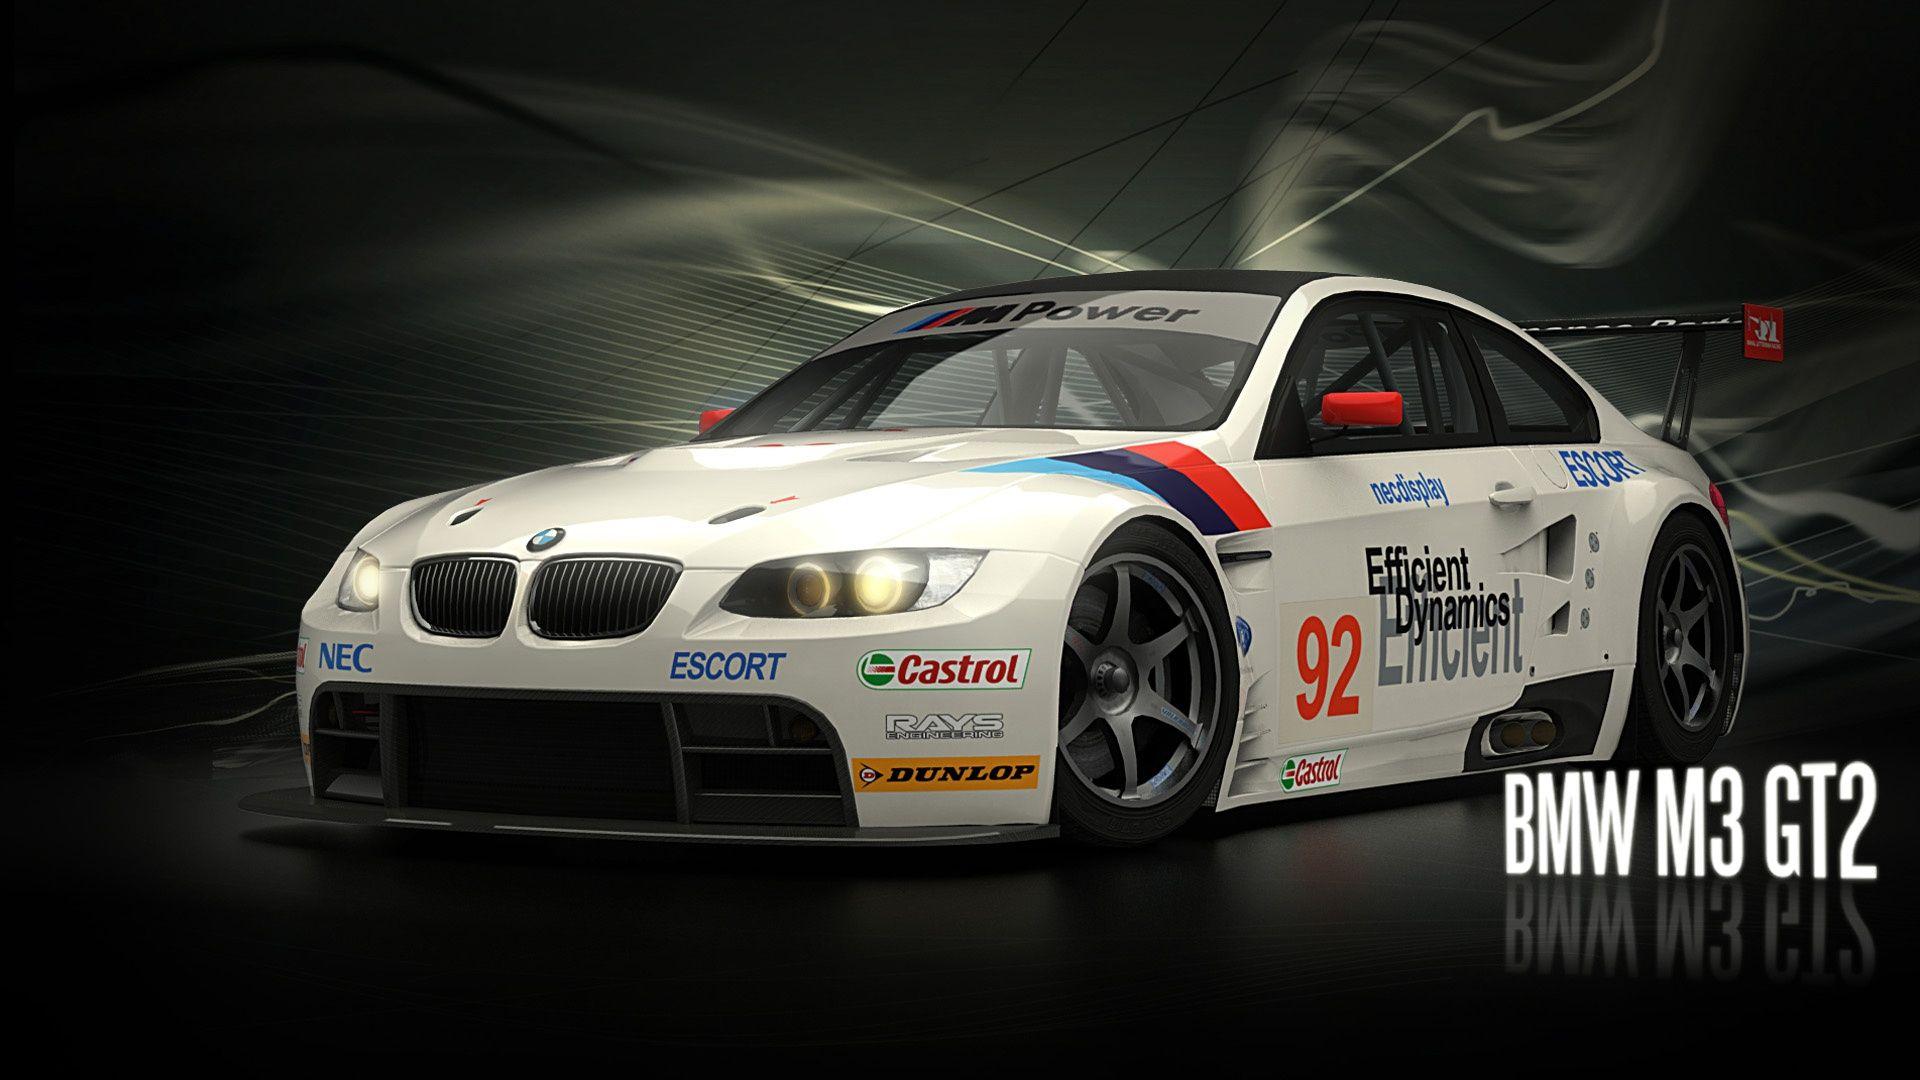 BMW M3 GT2 Sport Wallpaper in jpg format for free download